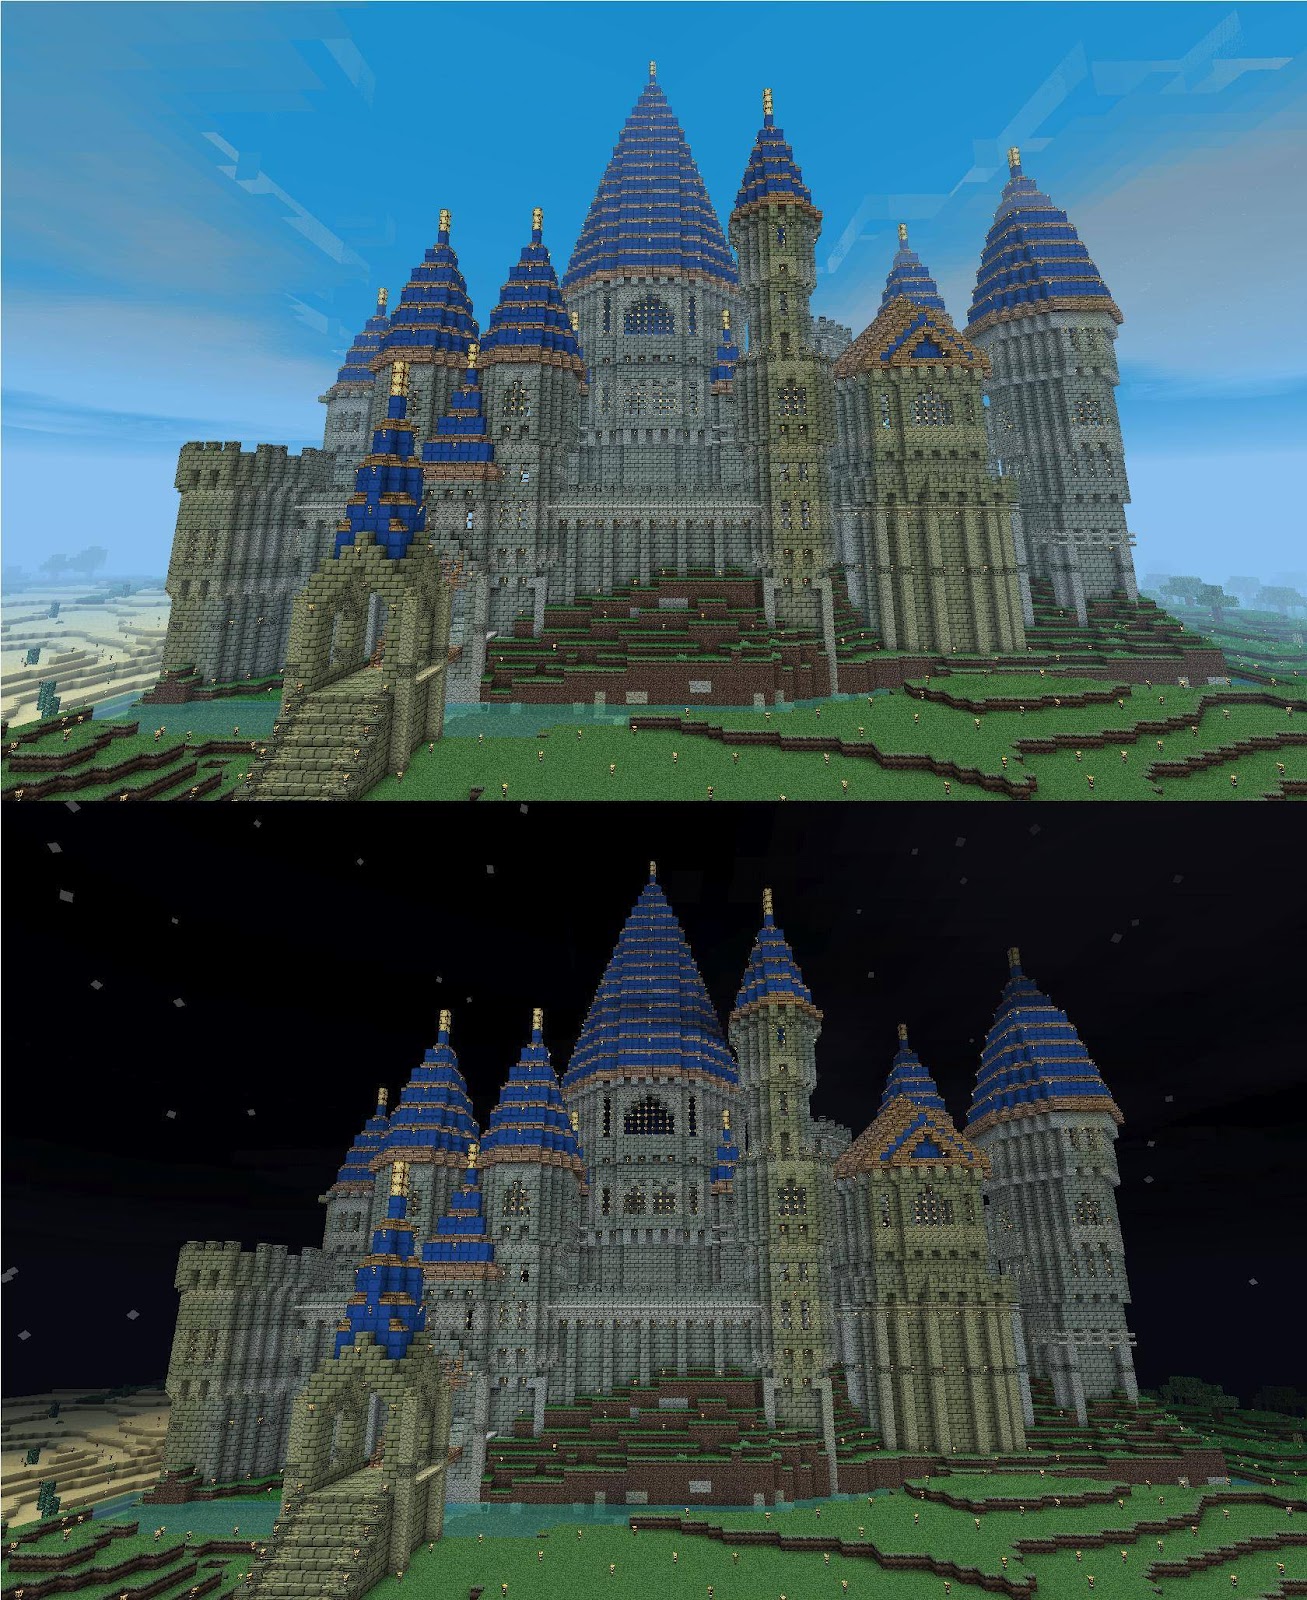 https://blogger.googleusercontent.com/img/b/R29vZ2xl/AVvXsEiBbUGhkvOy0x6Ku7Zgr5BlXsjDLbytXSdzcp3SAlrzIOHWe2M40PQl0UfMWSyd1E4w0ltT7hbiJmPKS2F7IhmnVCicmKulPOSY6v2ob4UlEr3AznICptGOsNDSFUUgYjgz6MNl15dehuE/s1600/Enormous+Colourful+Minecraft+Castle.jpg